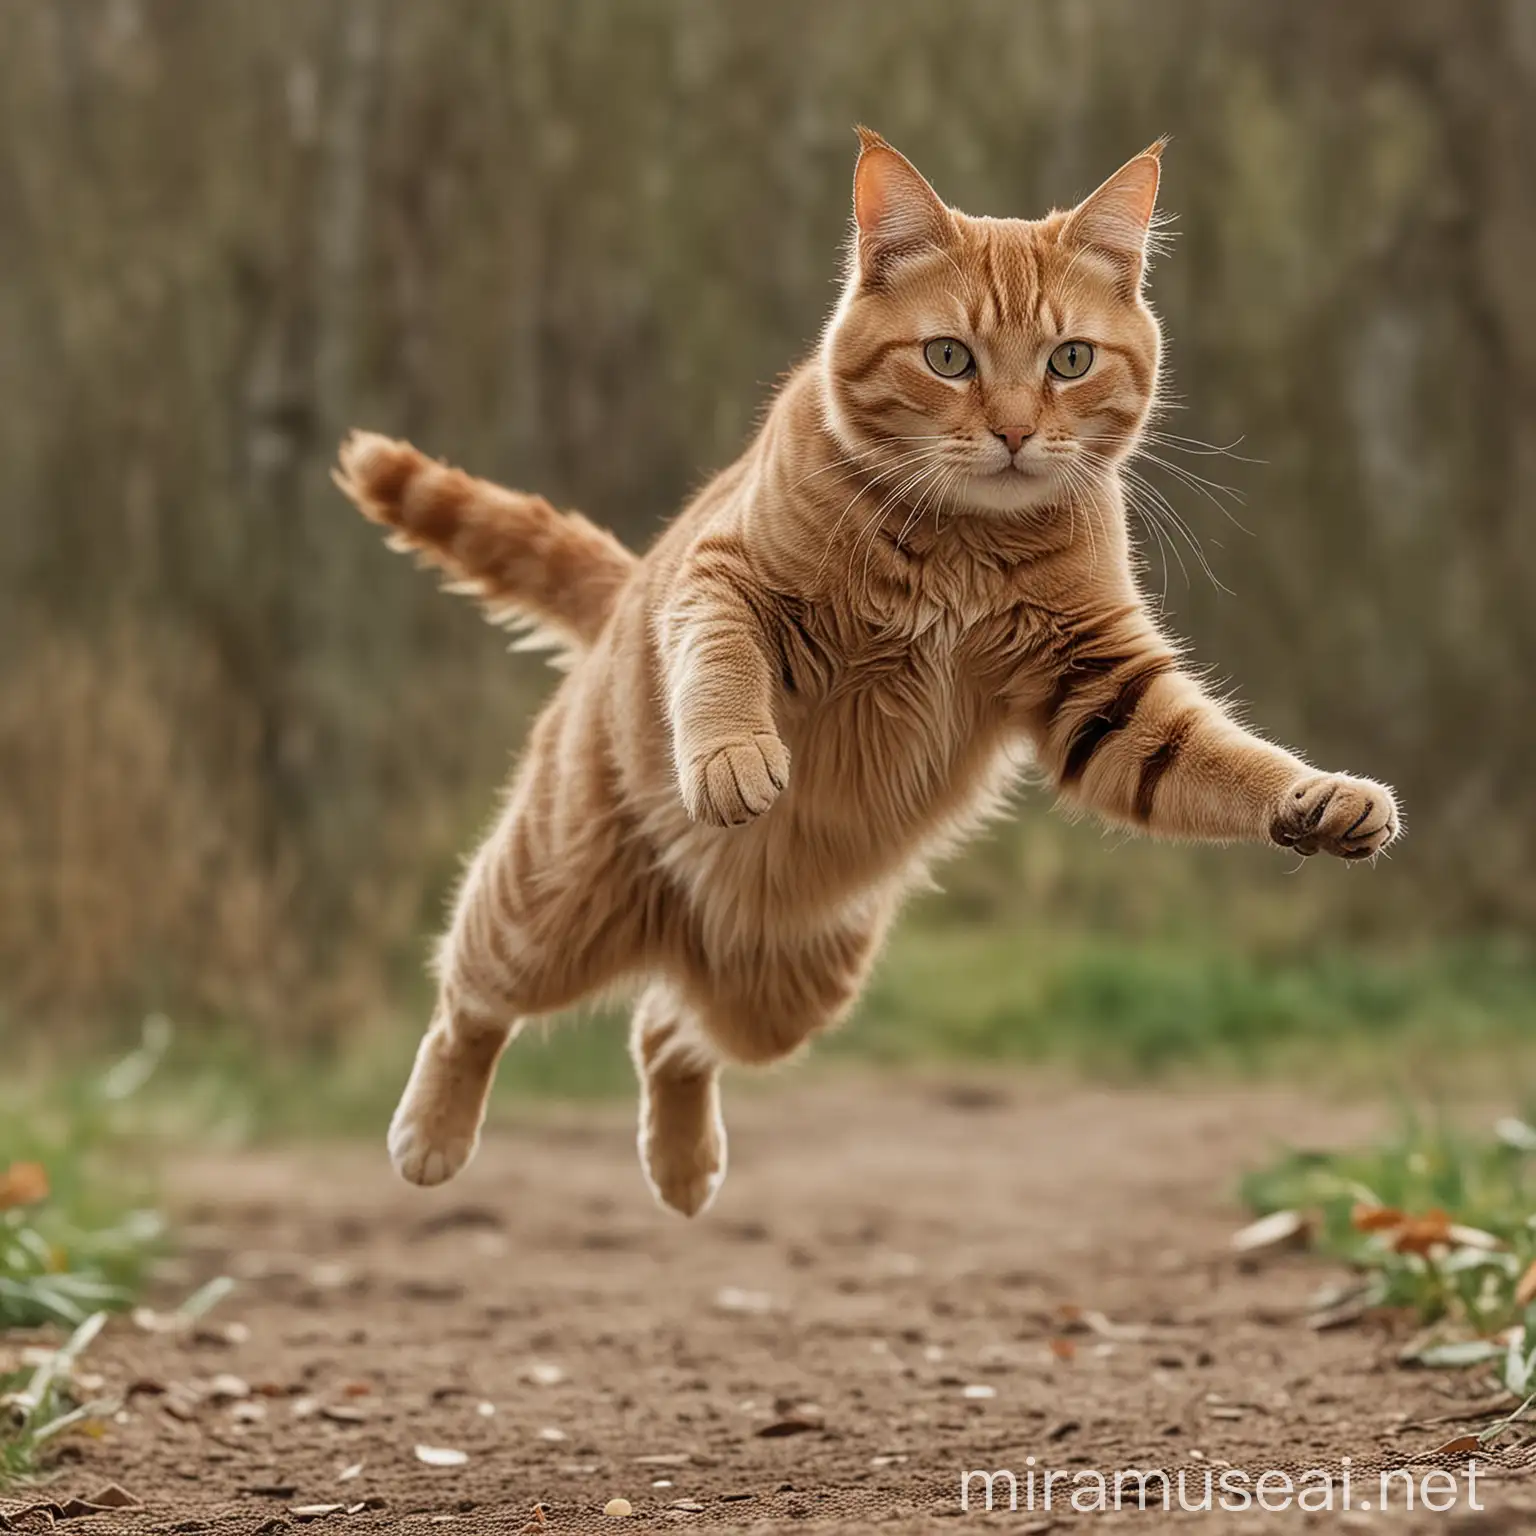 Dynamic Cat Photography Capturing the Elegance of Feline Motion